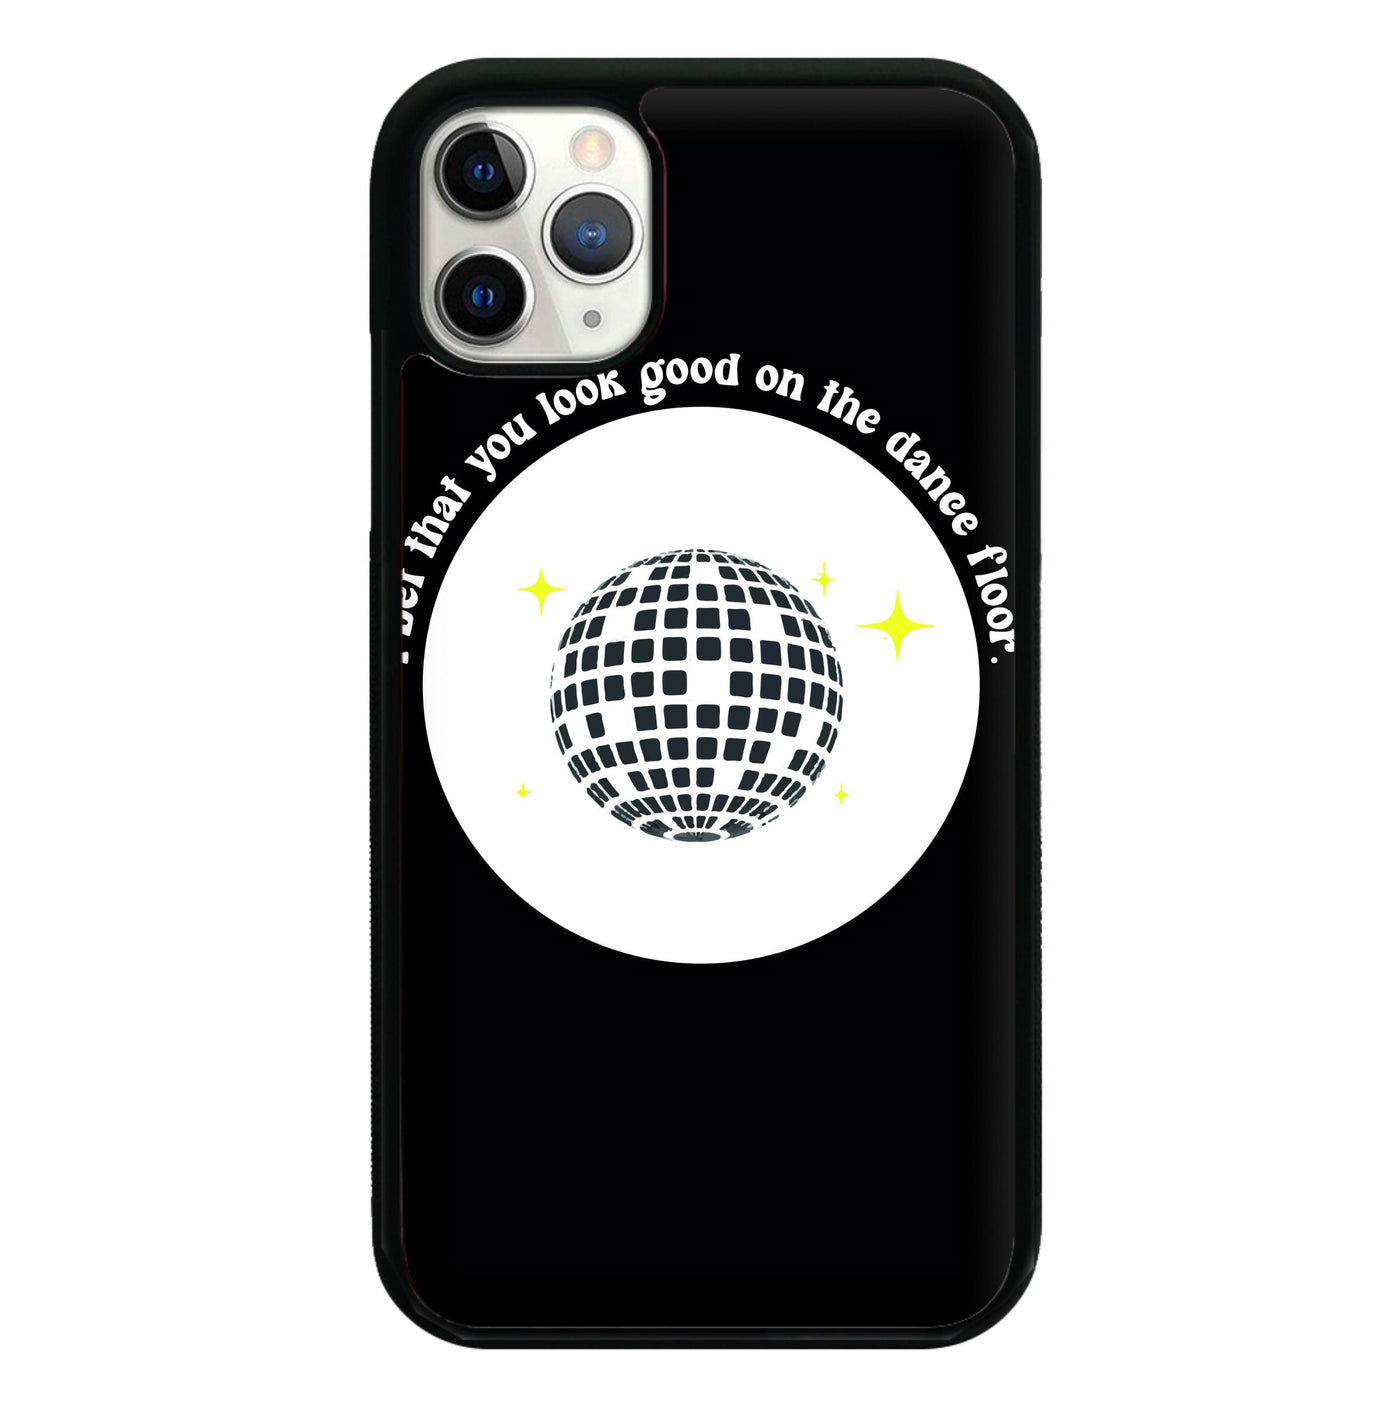 I bet that you look good on the dance floor - Arctic Monkeys Phone Case